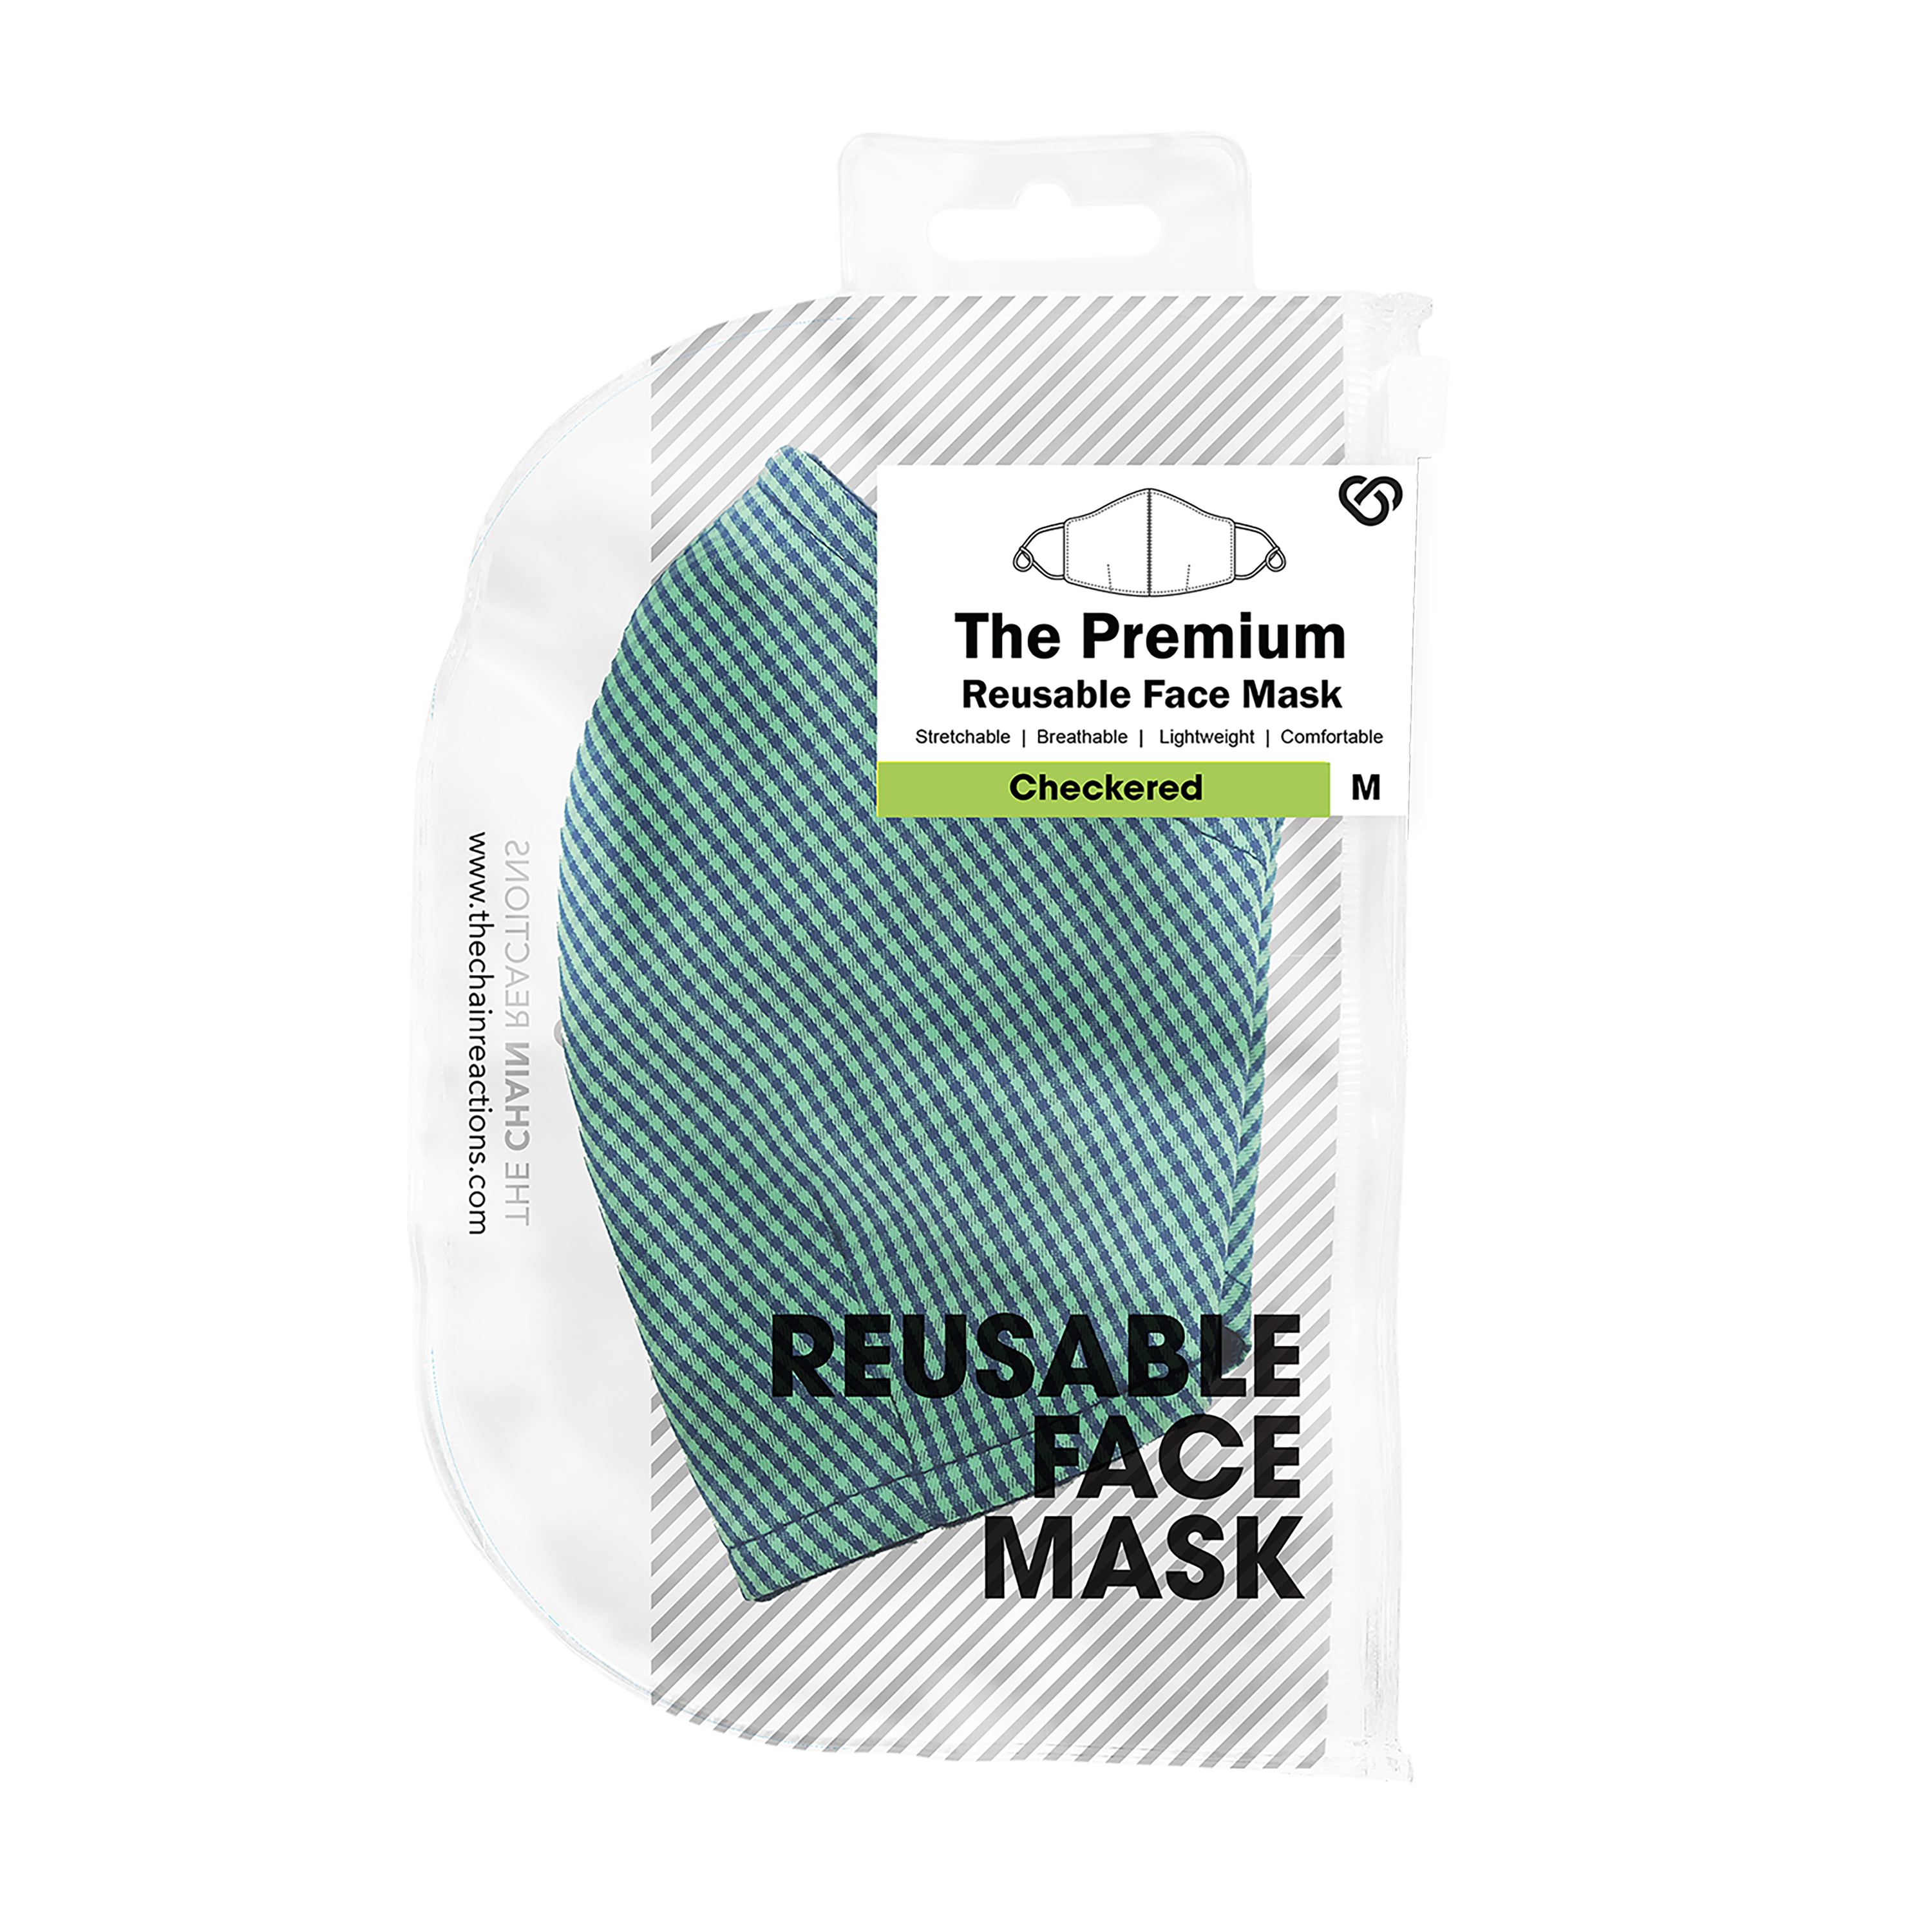 The Premium Reusable Face Mask in Shepherd Check Green